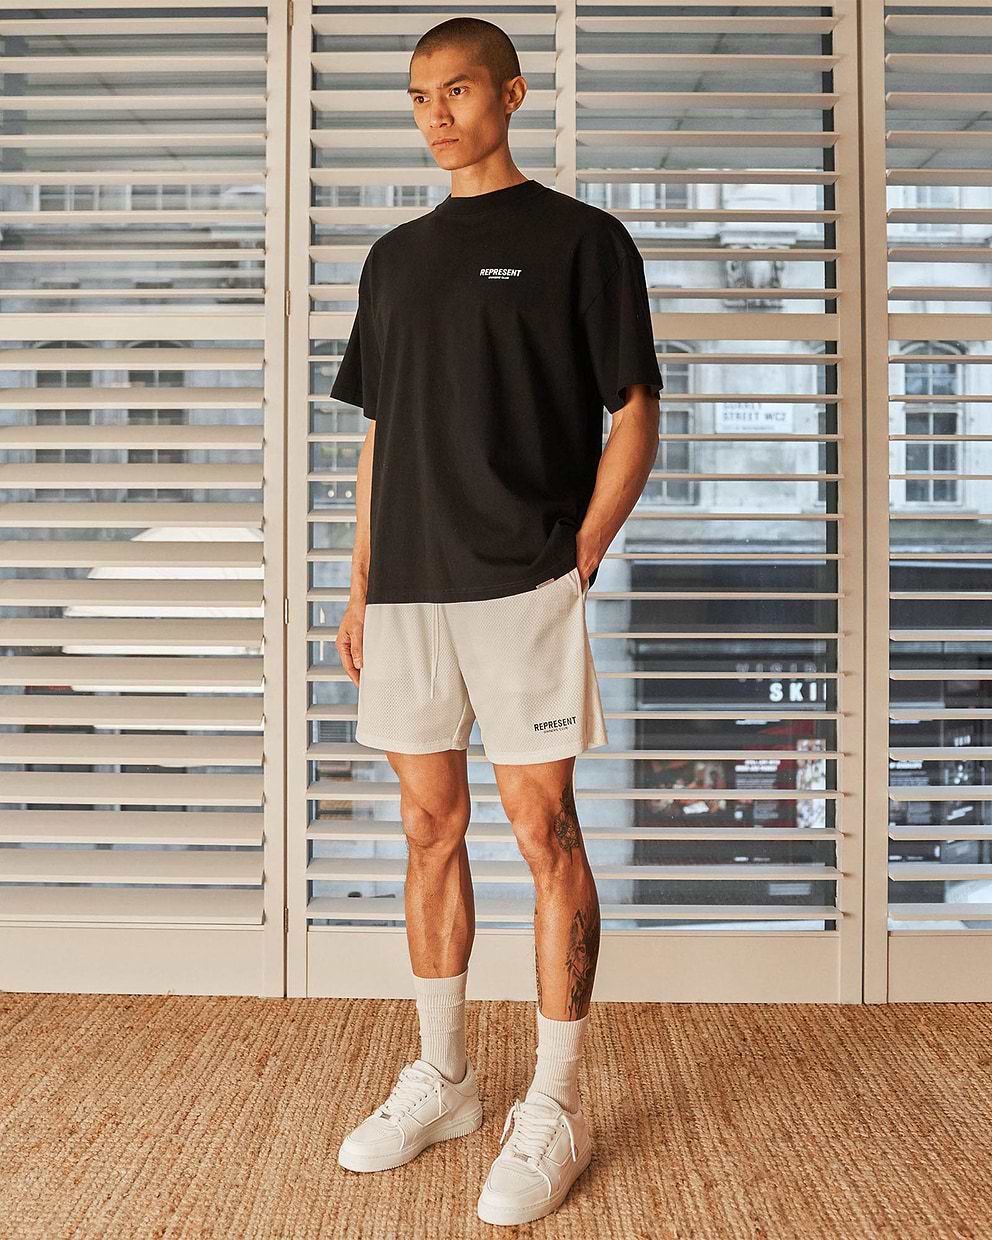 Represent Owners Club Mesh Shorts - Flat White